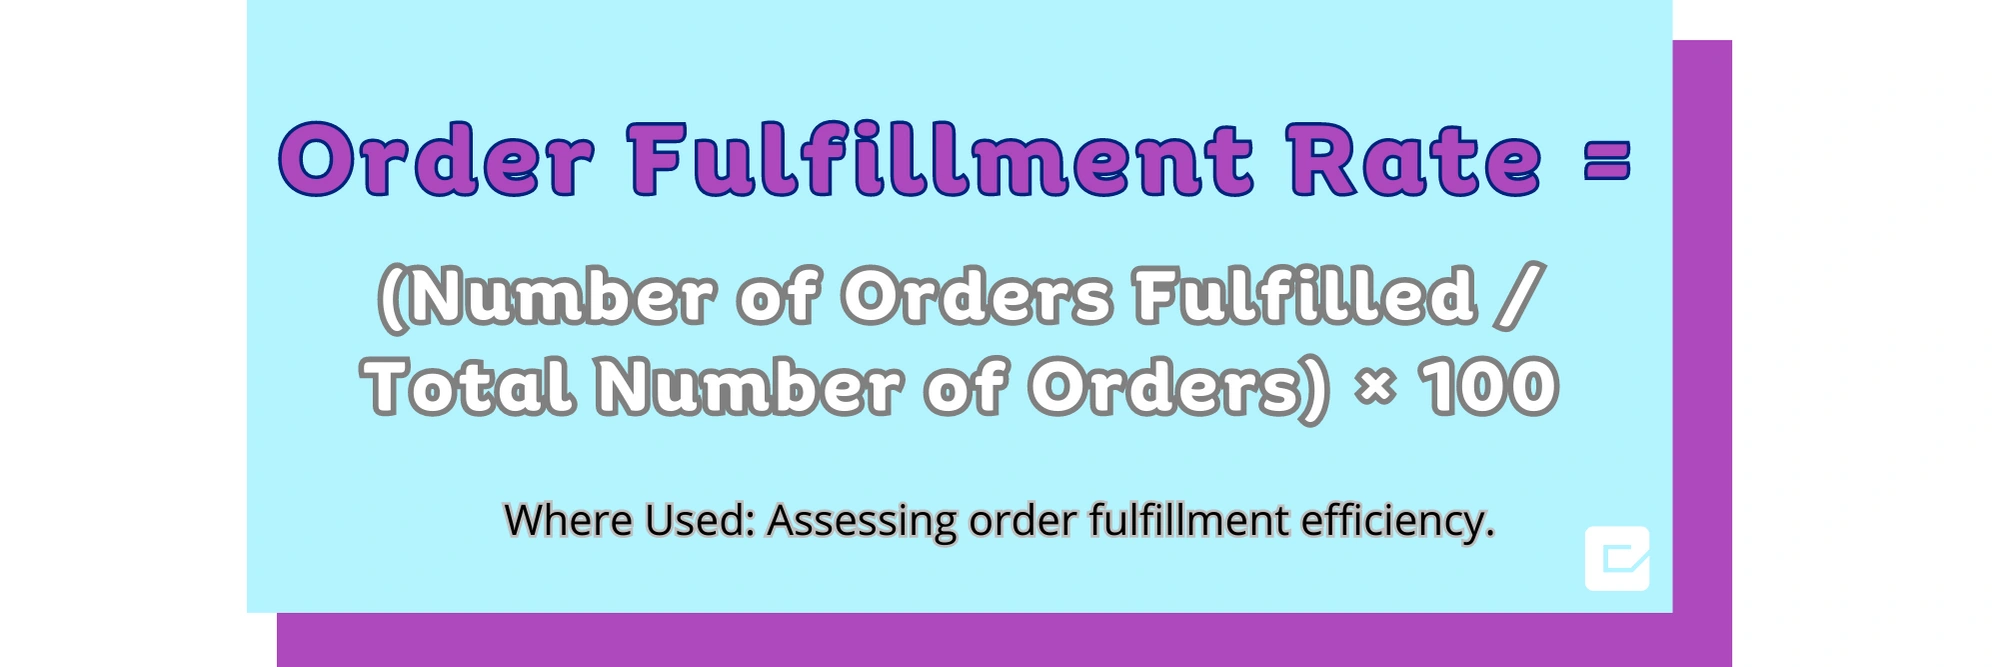 Order fulfillment rate in Amazon KPI metrics